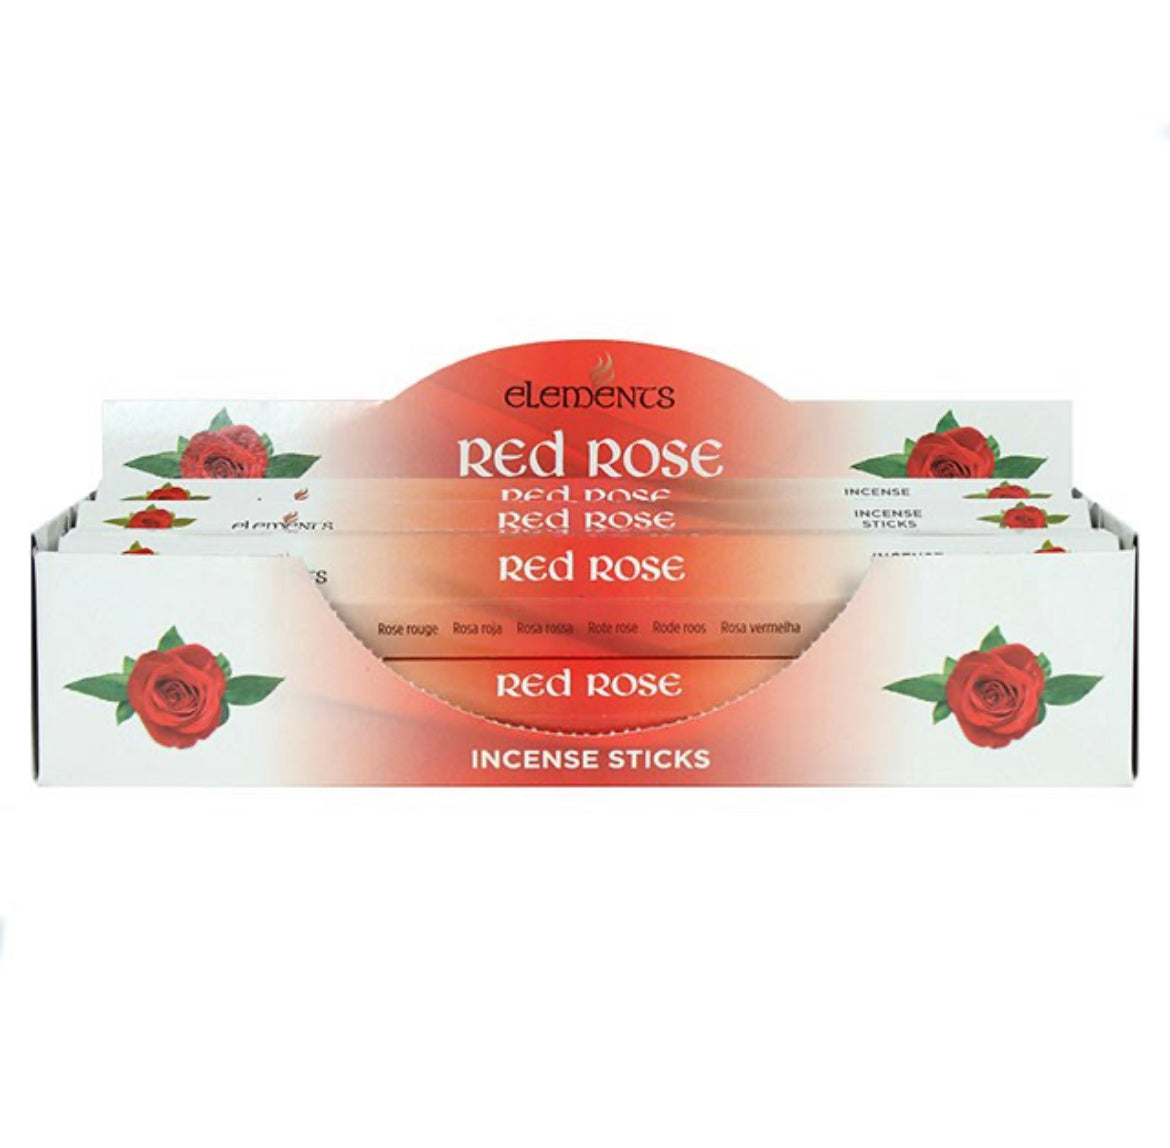 6 Packs of Red Rose Incense Sticks